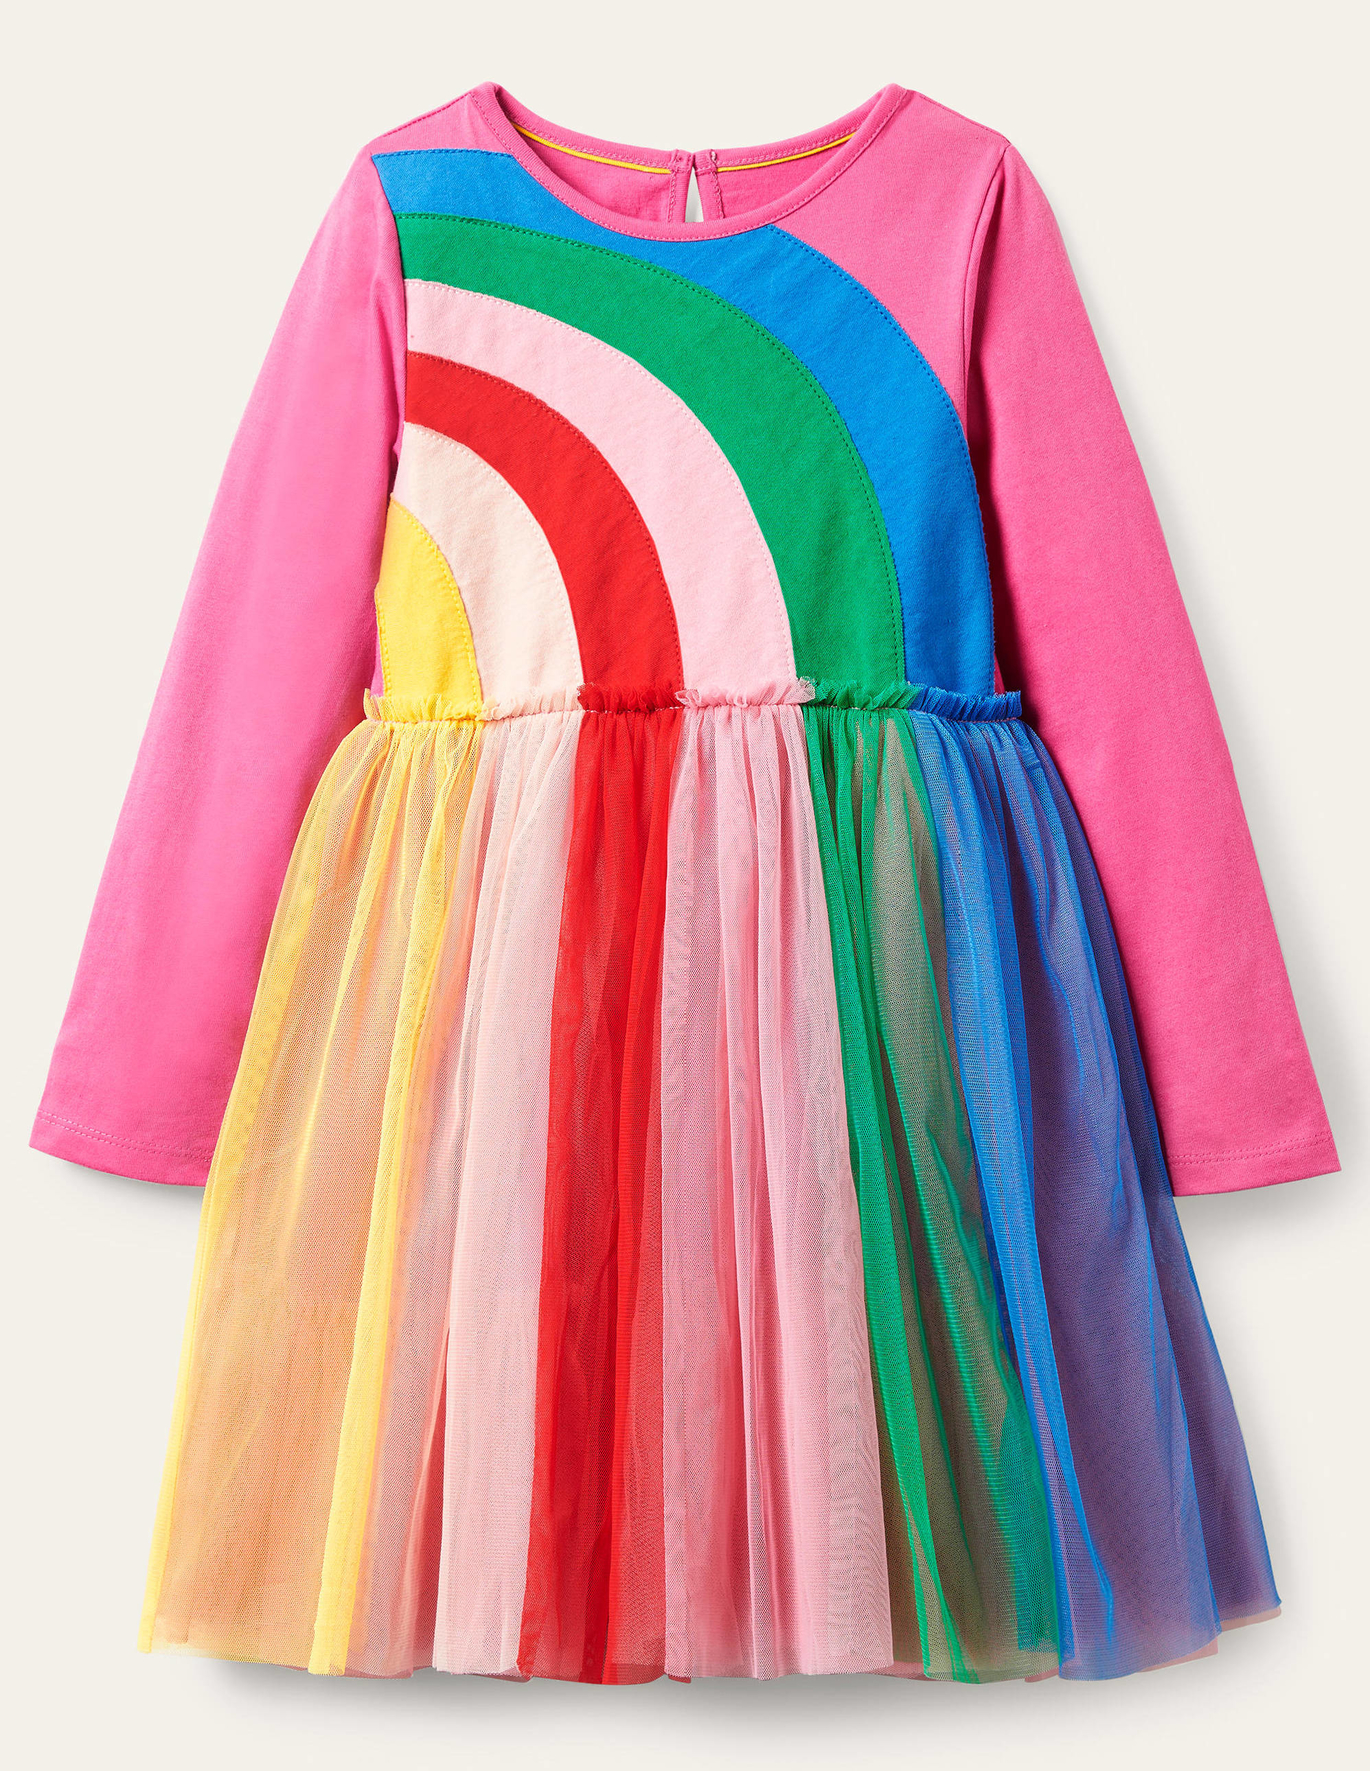 Boden Rainbow Tulle Dress - Tickled Pink Rainbow